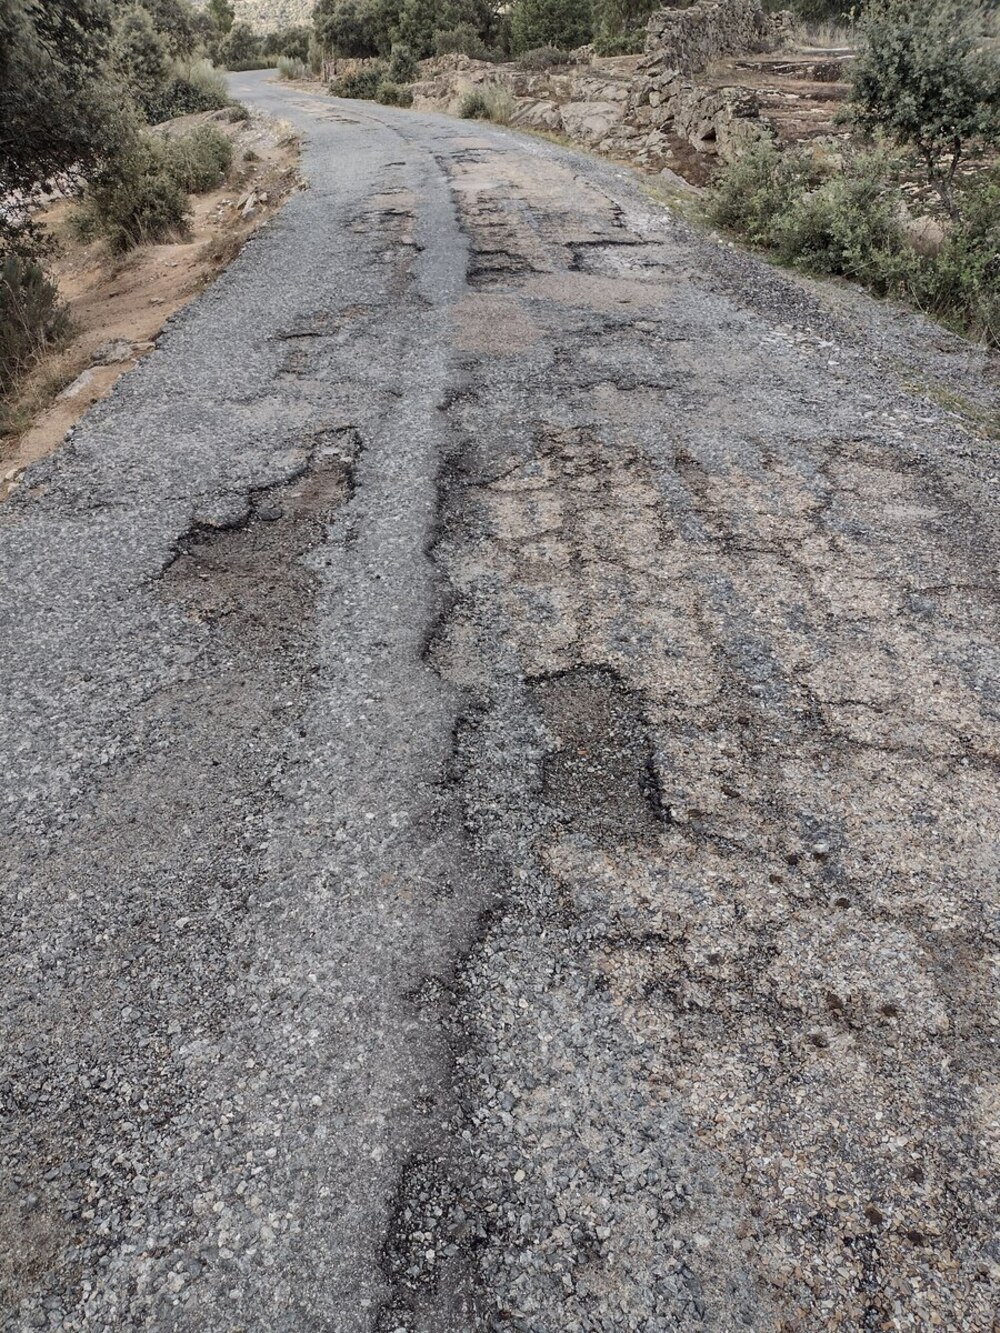 La carretera fantasma de Pelahustán